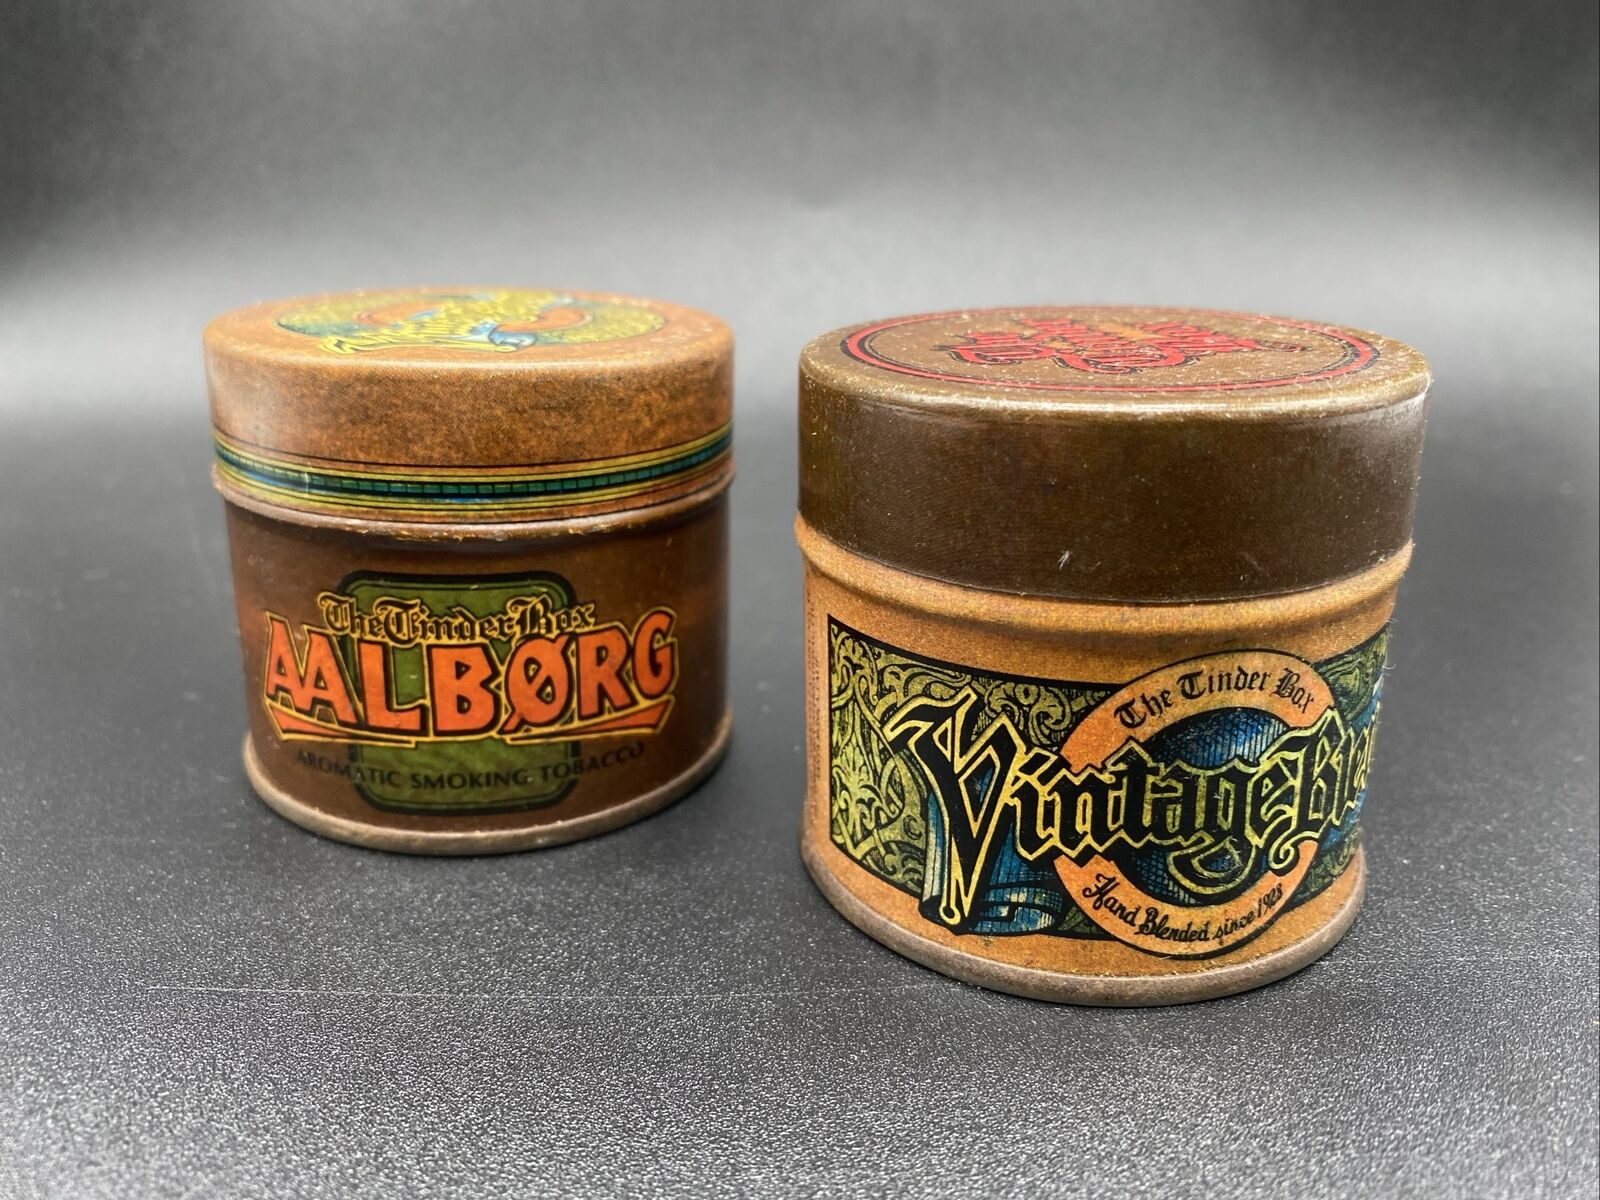 Vintage The Tinder Box Tobacco Tins Aalborg Vintage Blend Small 